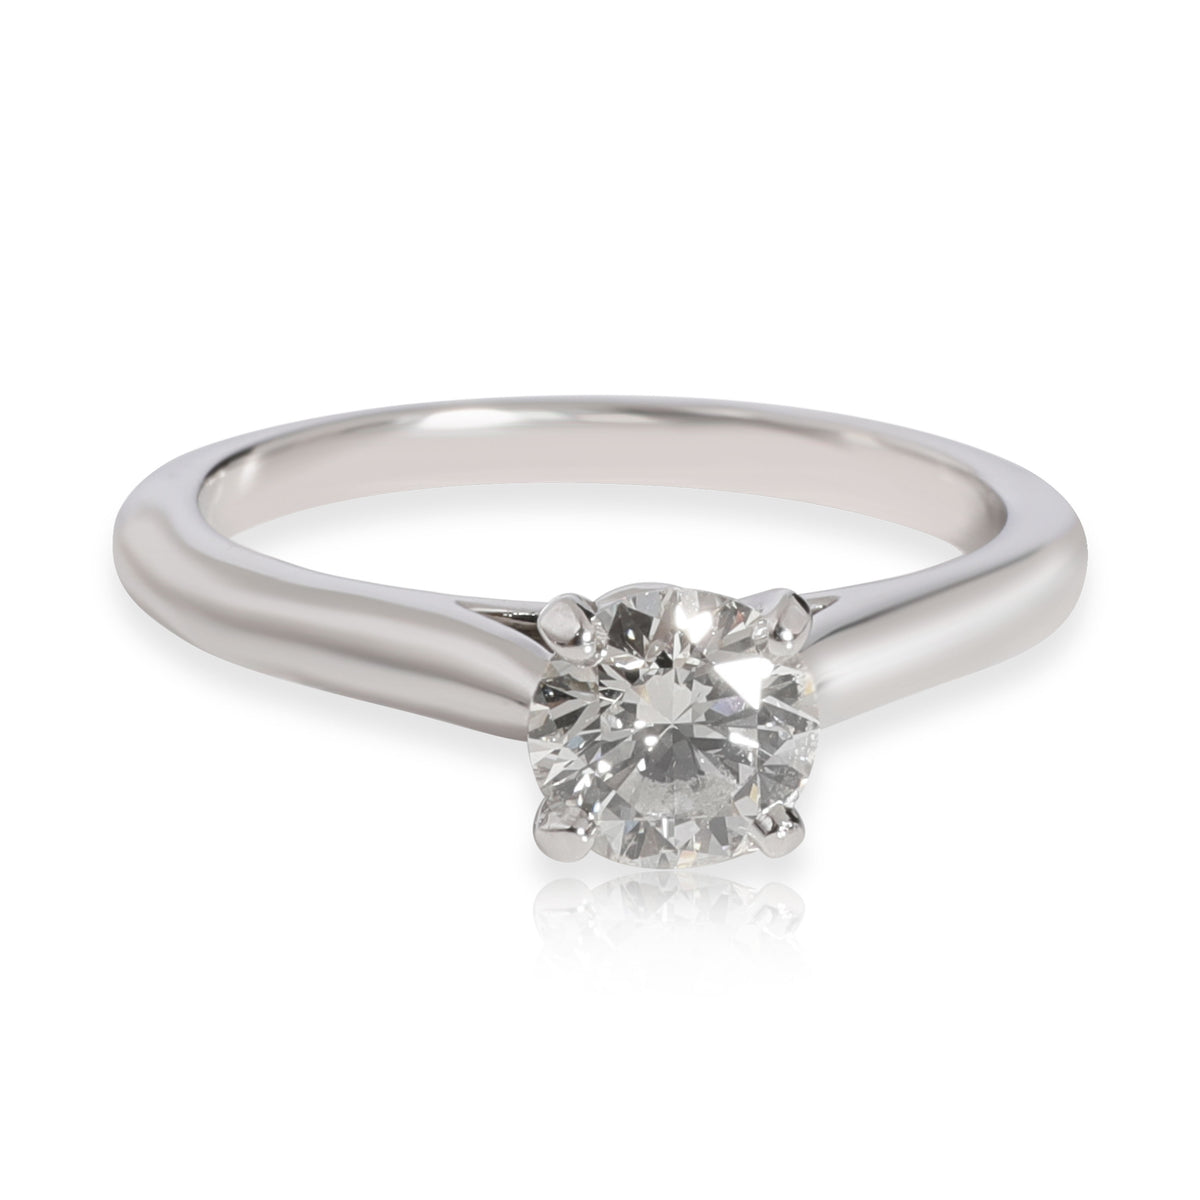 Cartier 1895 Diamond Solitaire Engagement Ring in Platinum H VVS2 0.74 CTW